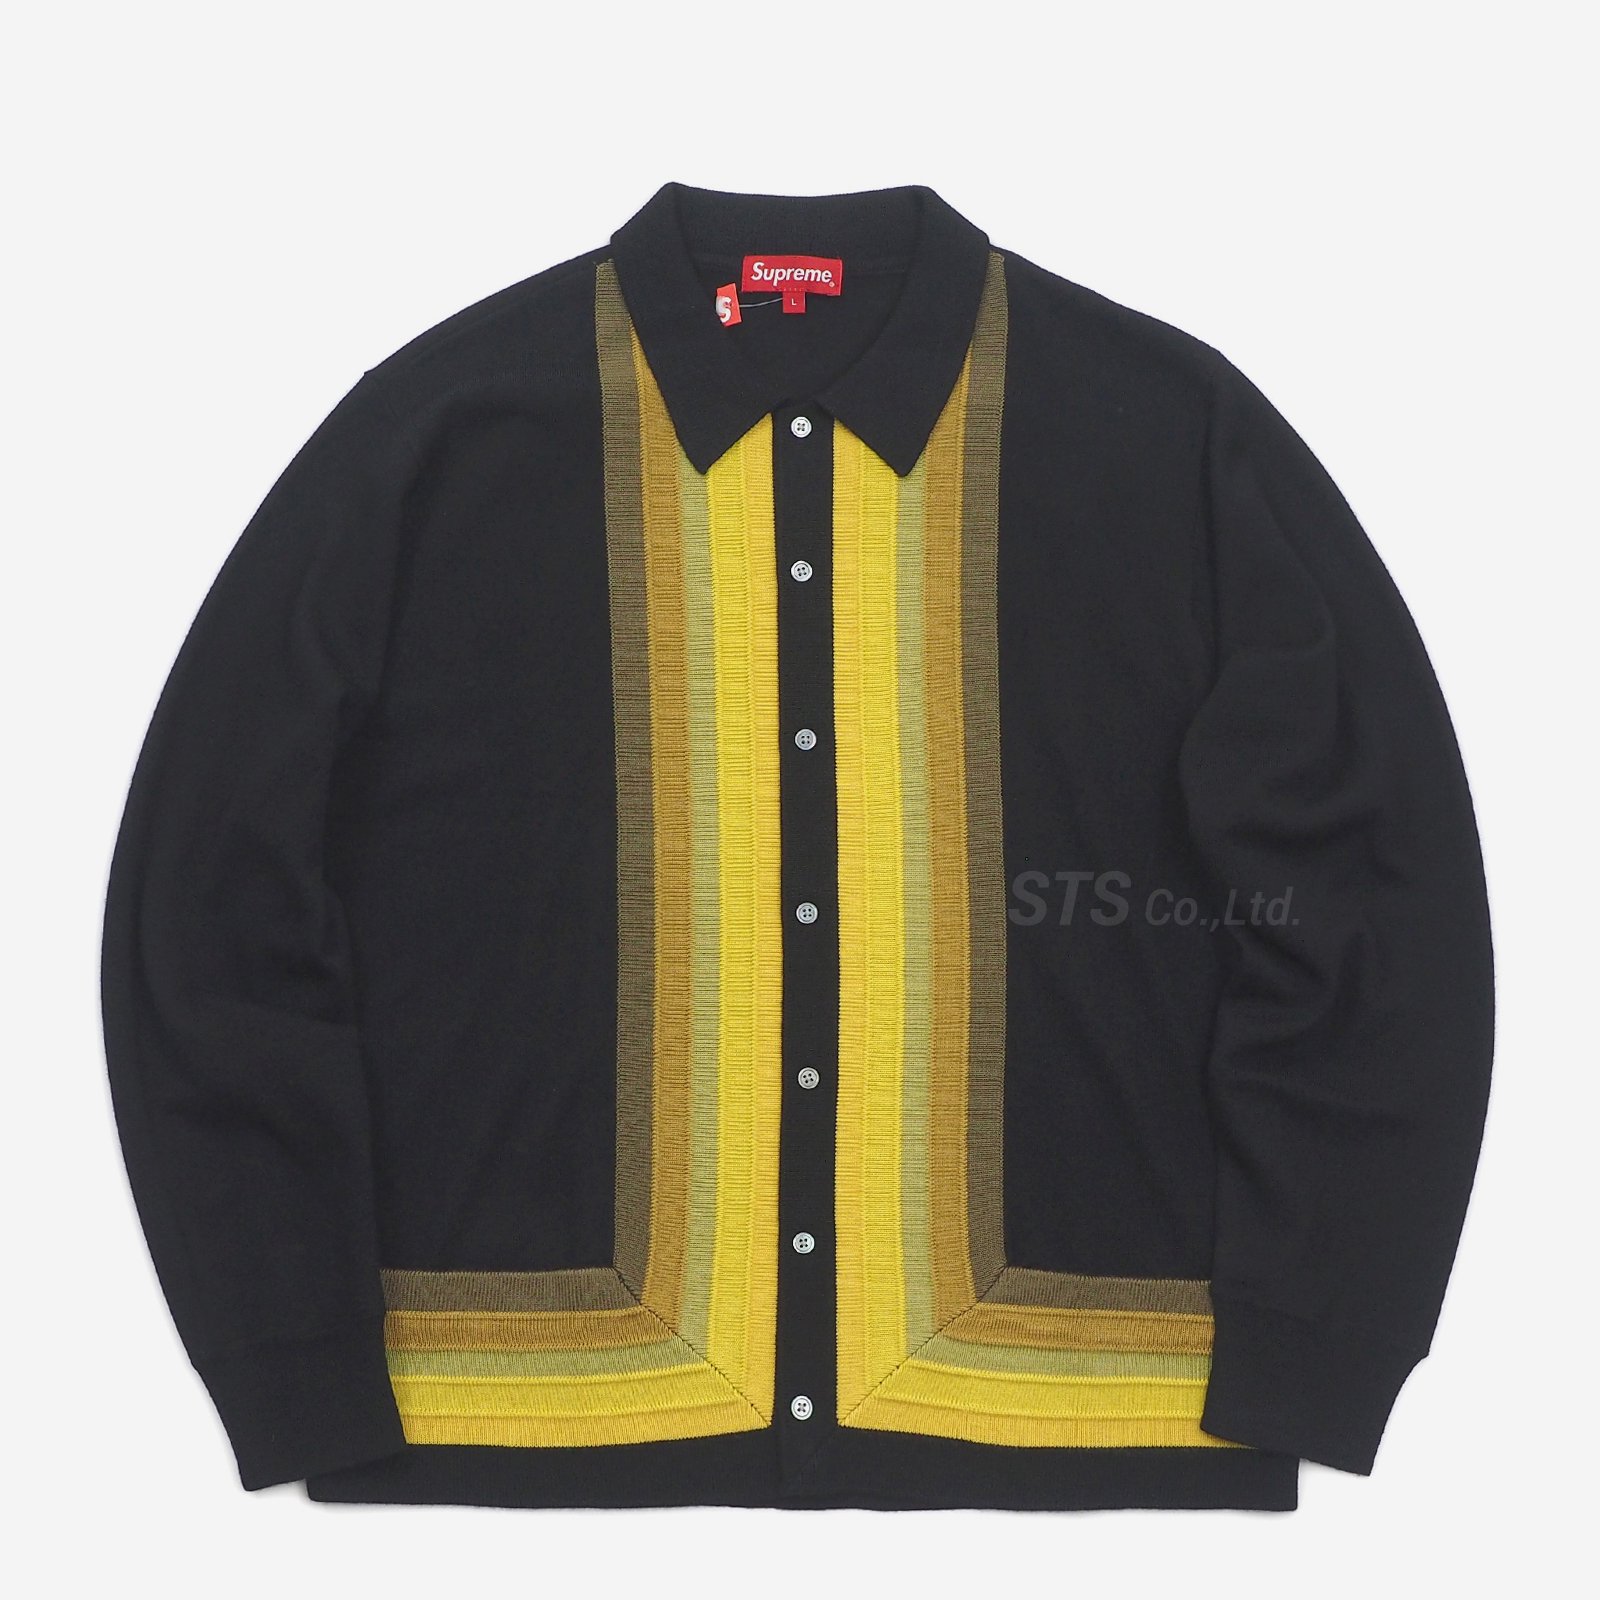 Supreme corner stripe polo sweater16100円はいかがでしょうか